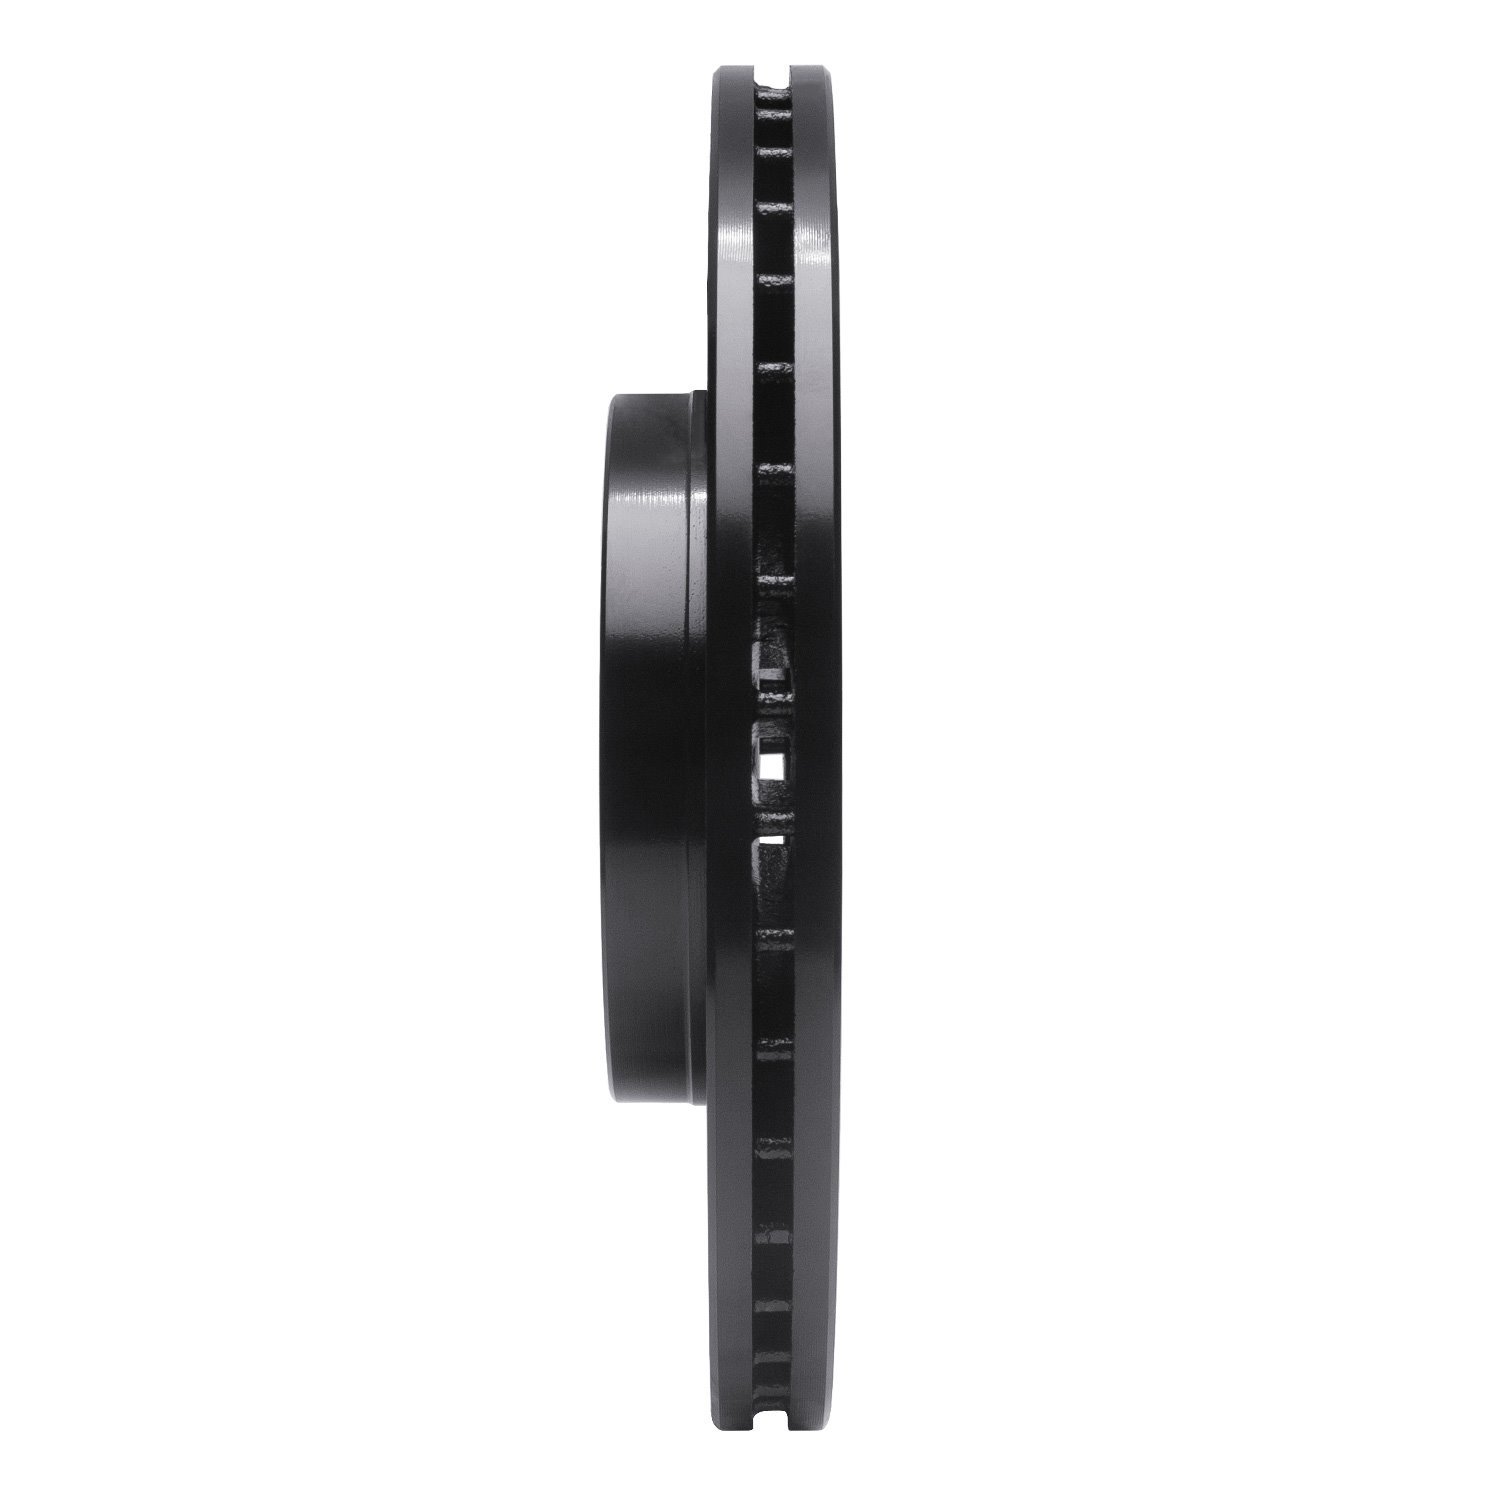 Drilled/Slotted Brake Rotor [Black], 2014-2019